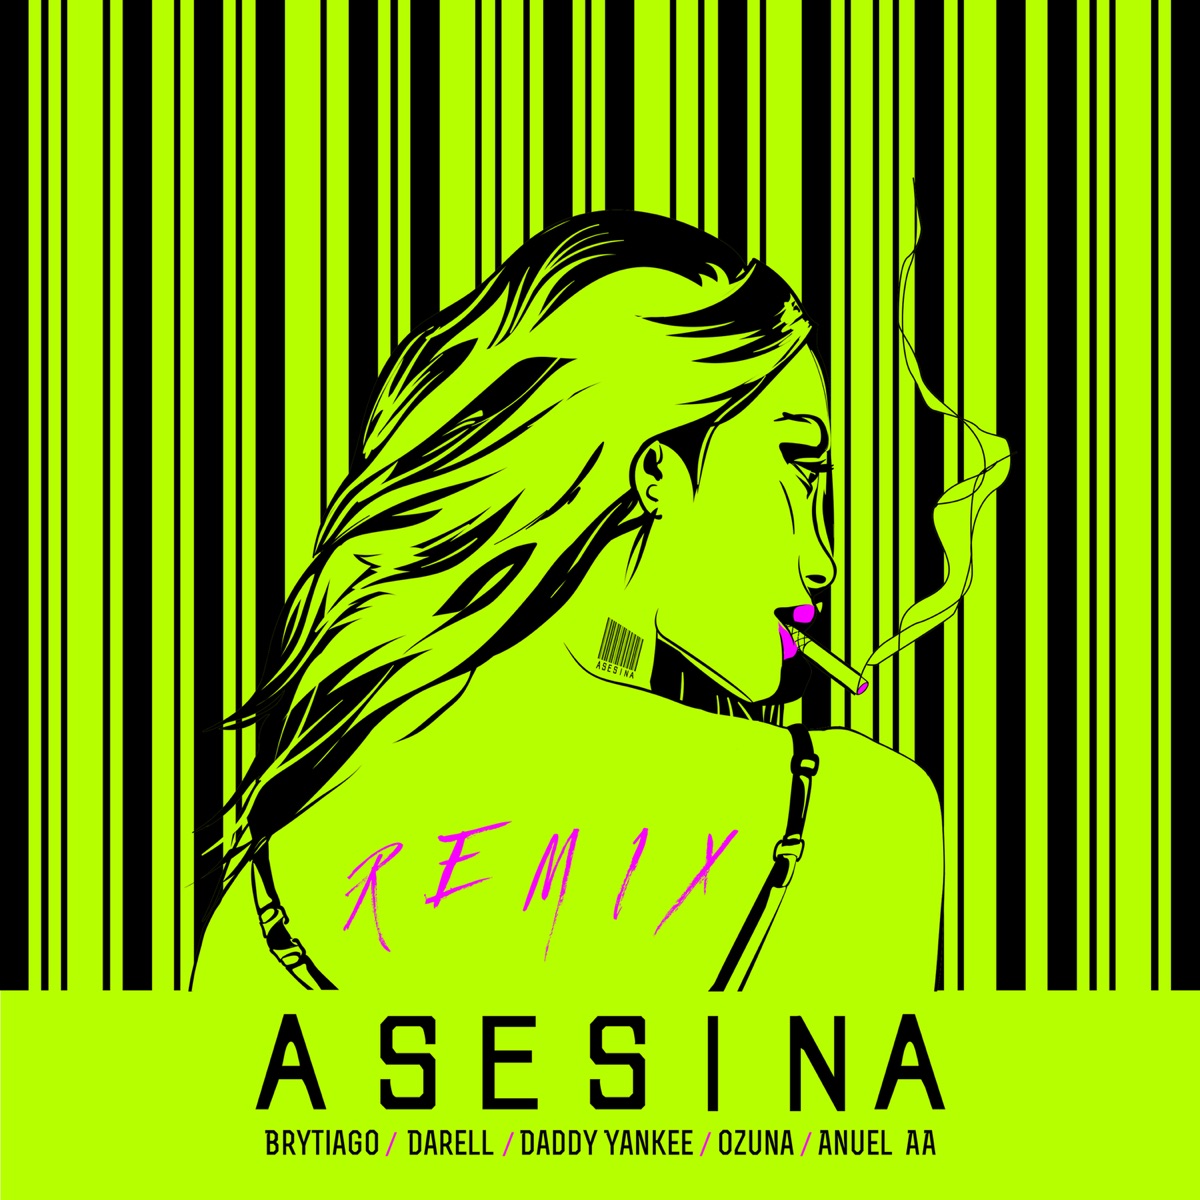 Asesina (Remix) [feat. Daddy Yankee, Ozuna & Anuel AA] - Single by Brytiago  & Darell on Apple Music